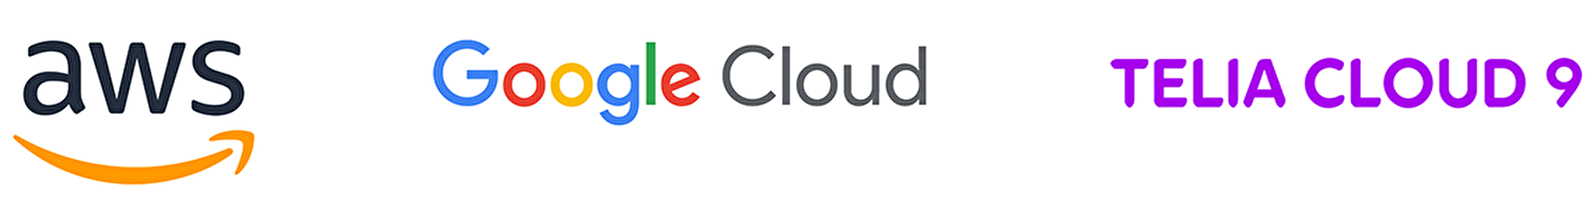 Pilvipalvelujen logot. Amazon Web Services (AWS), Google Cloud Platform (GCP), Telia Cloud 9.